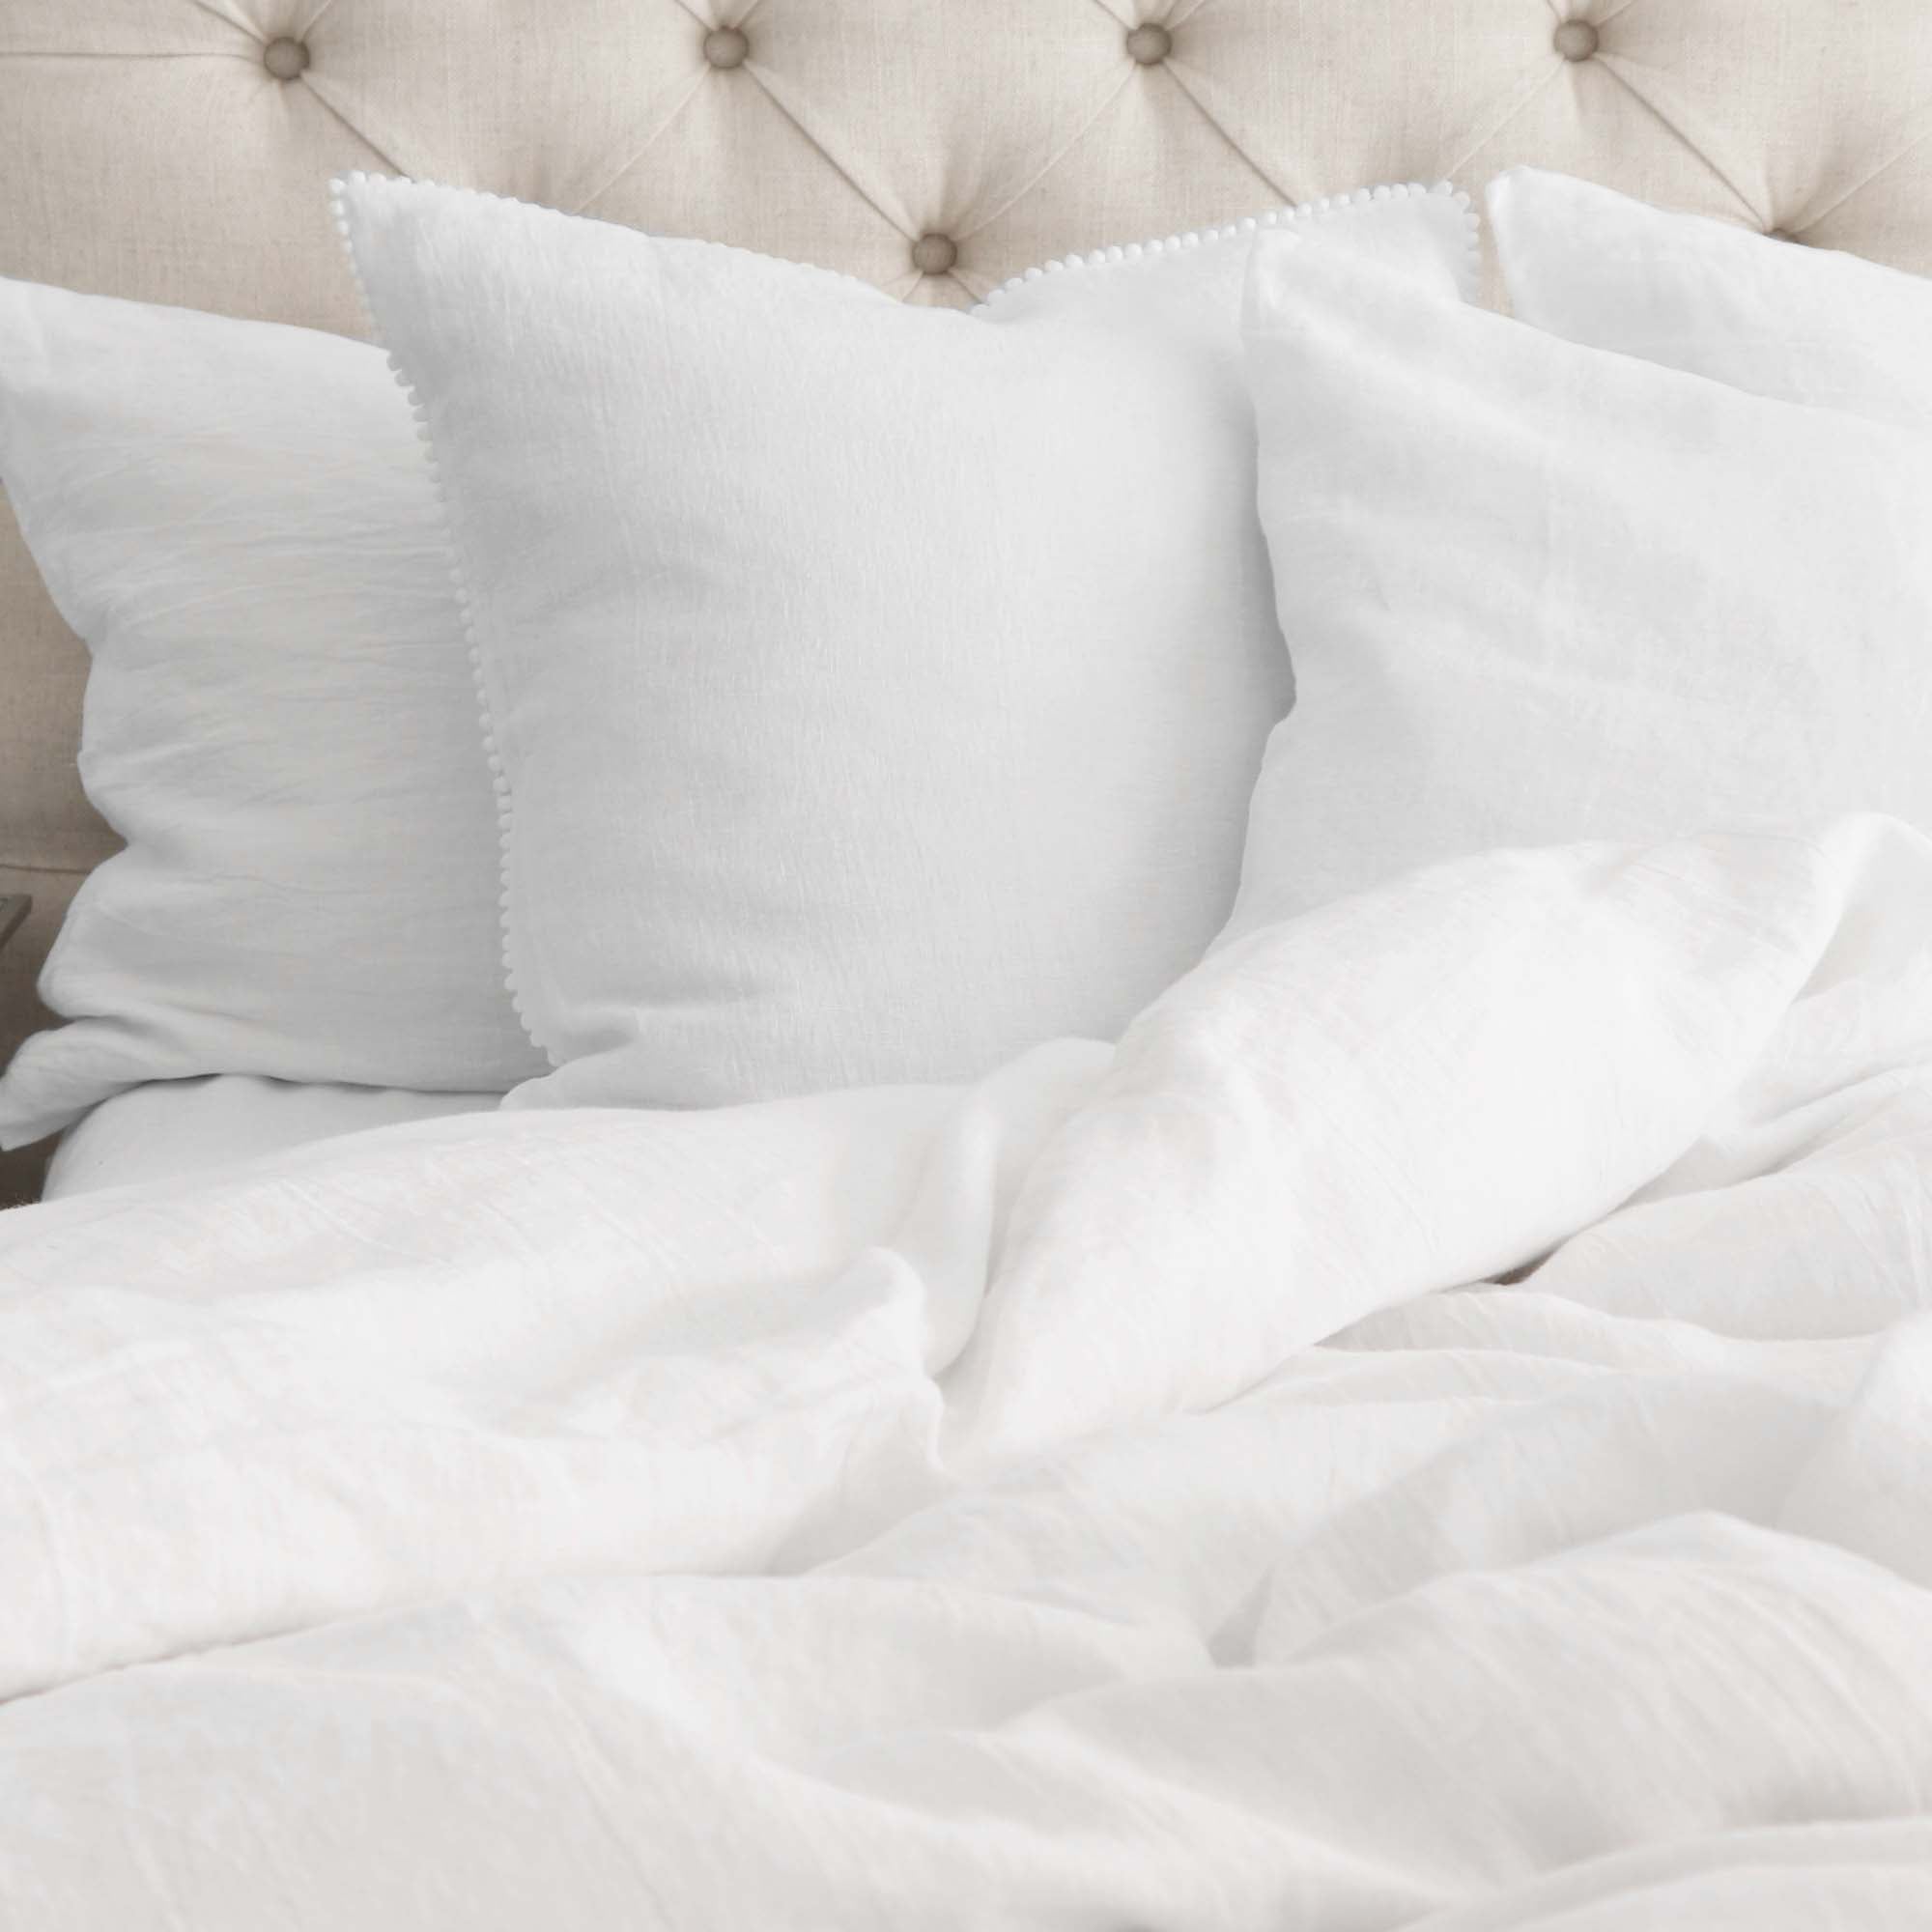 Linen Pillow Cases for Bedding in European Flax OEKO-TEX  Edit alt text